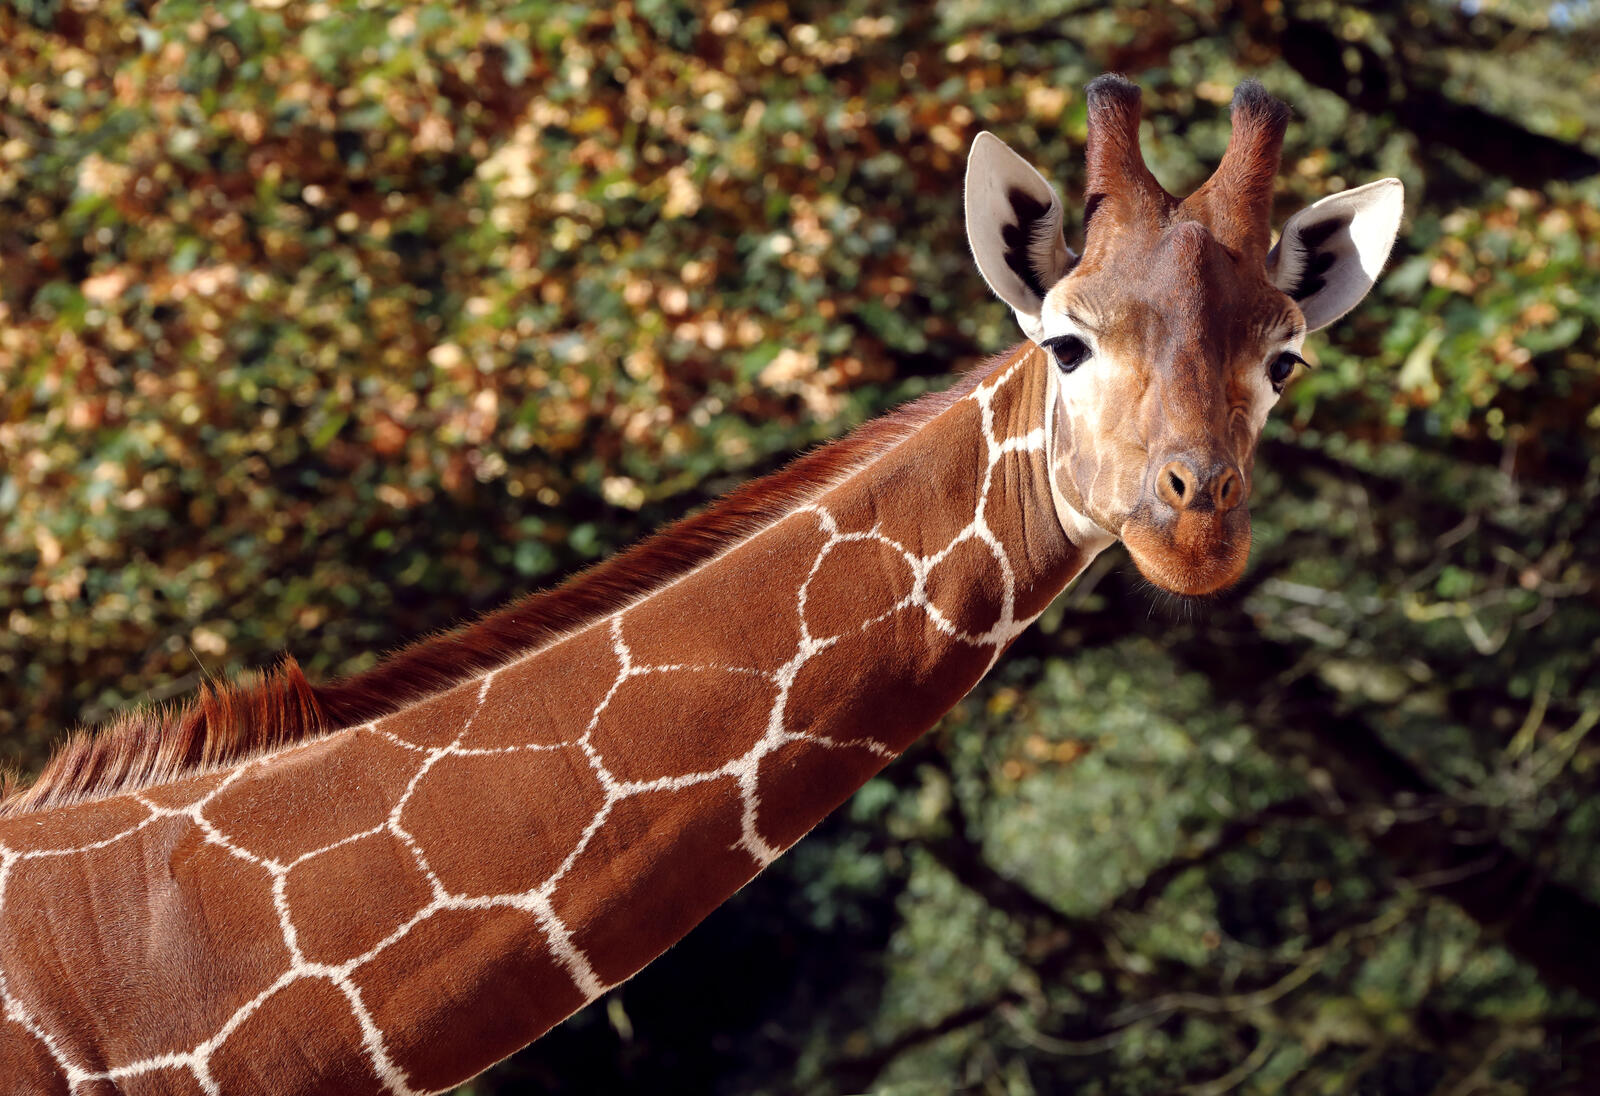 Wallpapers giraffe long neck muzzle on the desktop